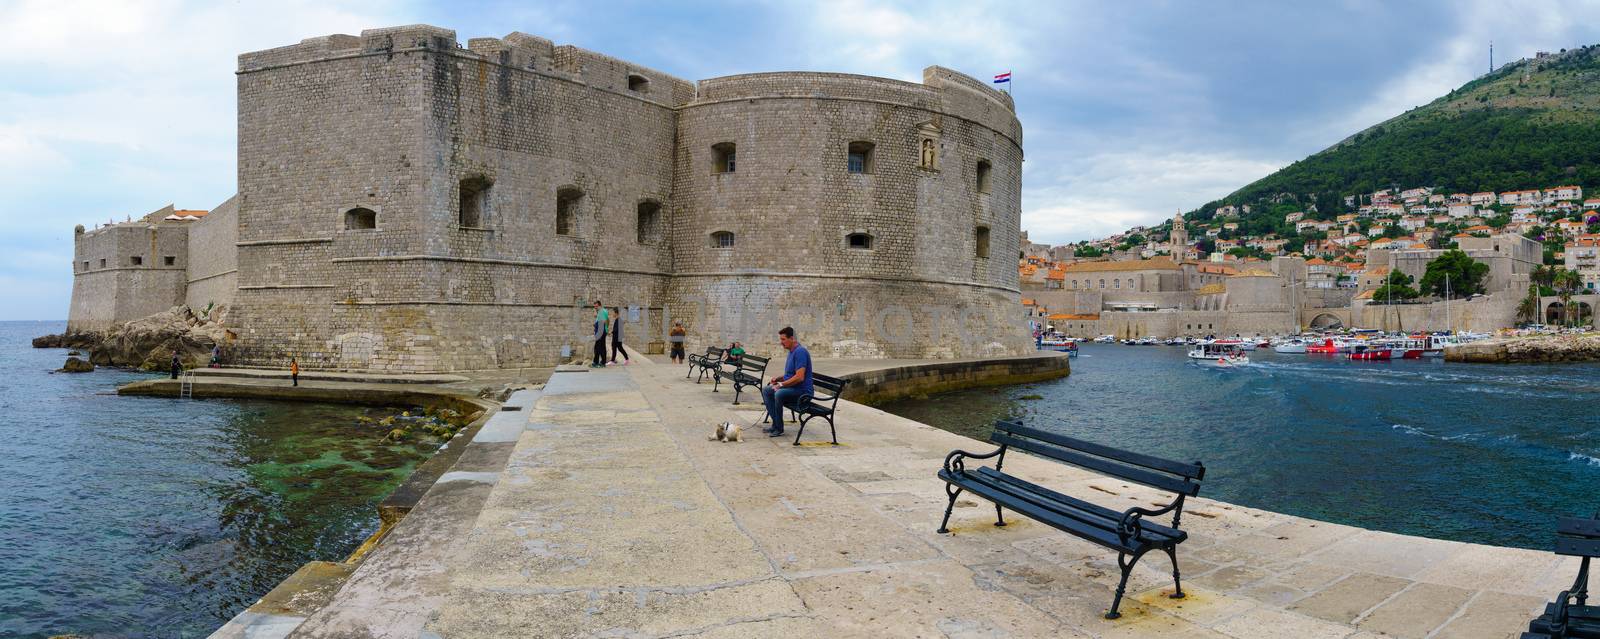 DUBROVNIK, CROATIA - JUNE 28, 2015: Panoramic view of the Porporela promenade and the port, with locals and tourists, in Dubrovnik, Croatia